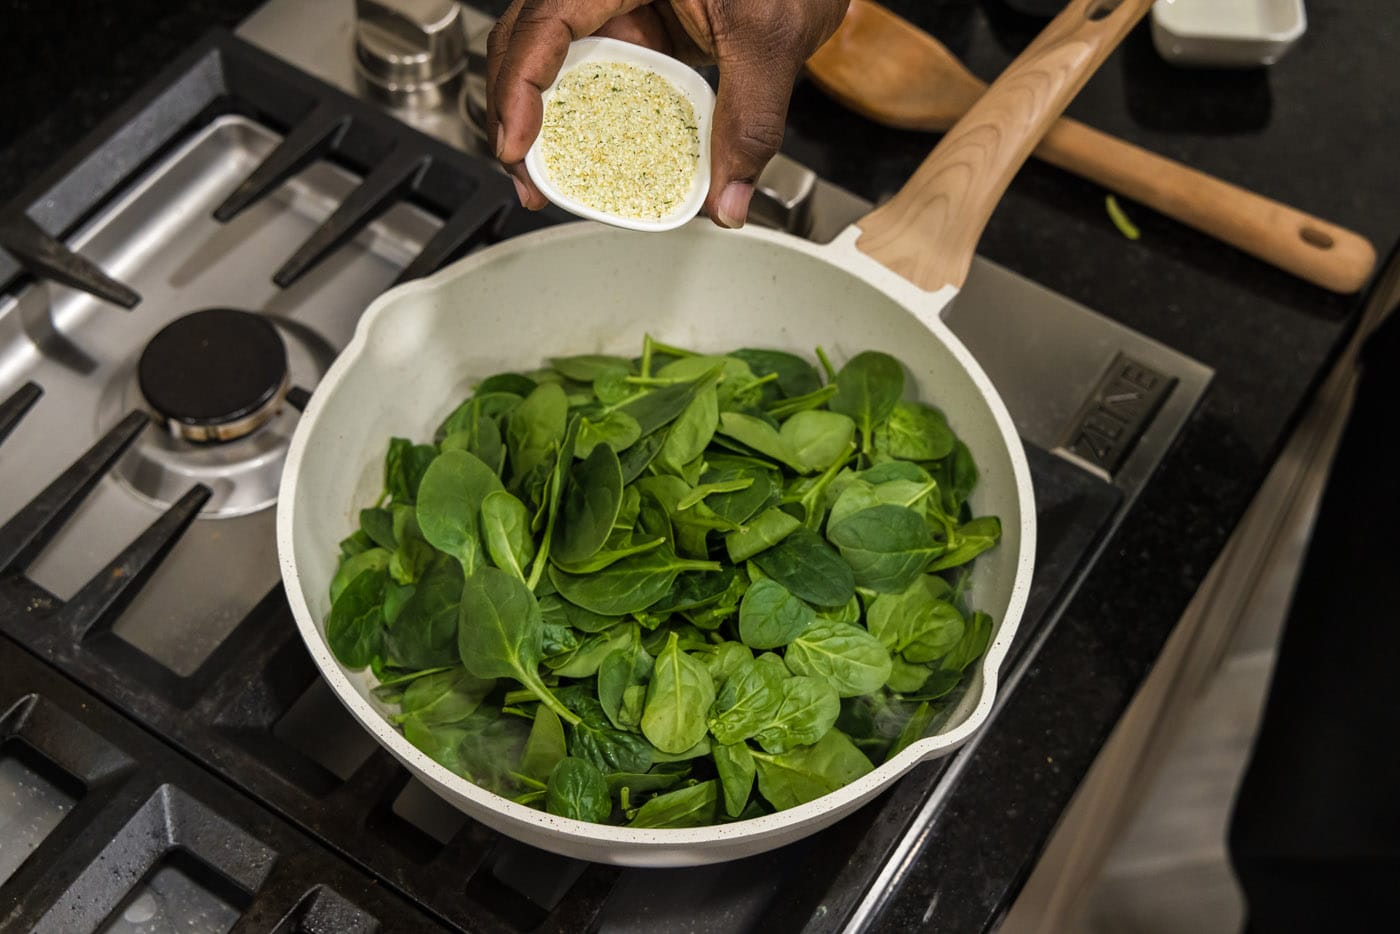 seasoning spinach leaves with garlic salt